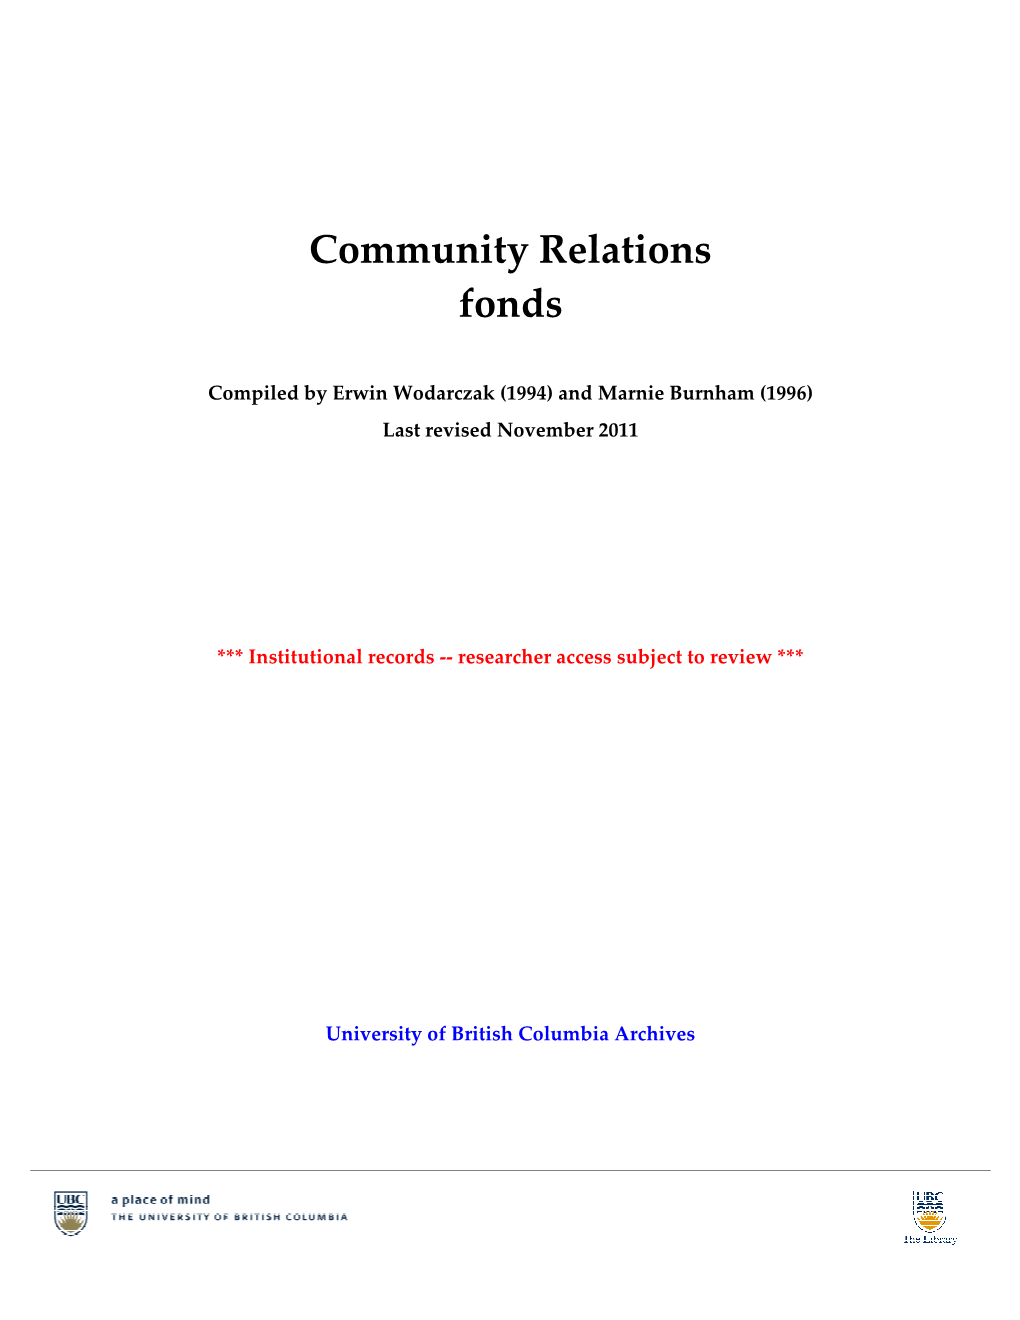 Community Relations Fonds